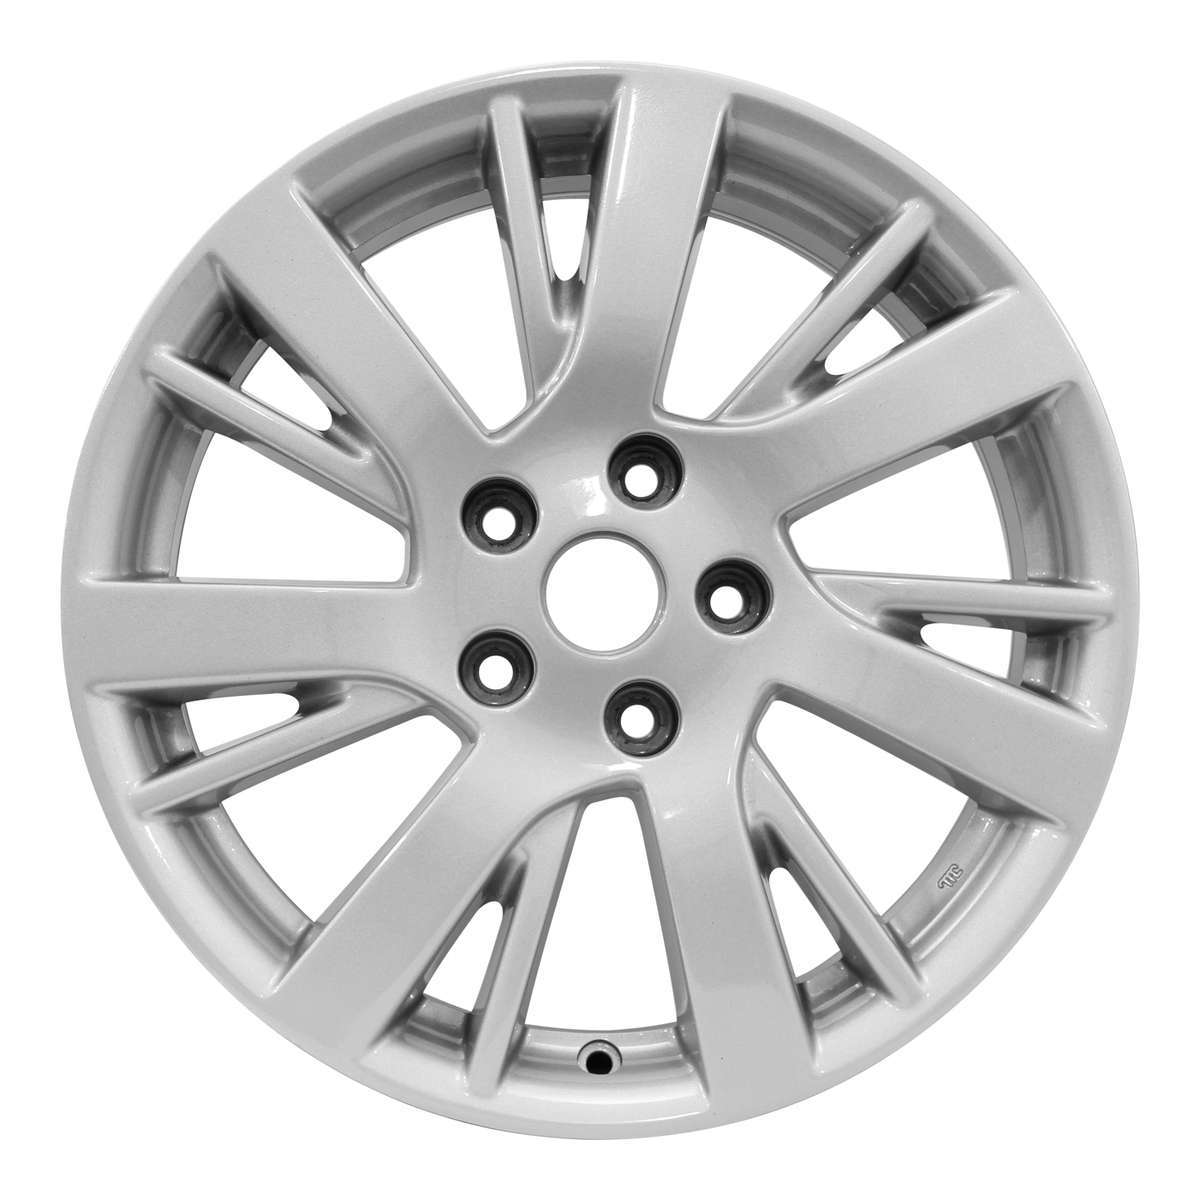 2014 Nissan Sentra New 17" Replacement Wheel Rim RW62601S